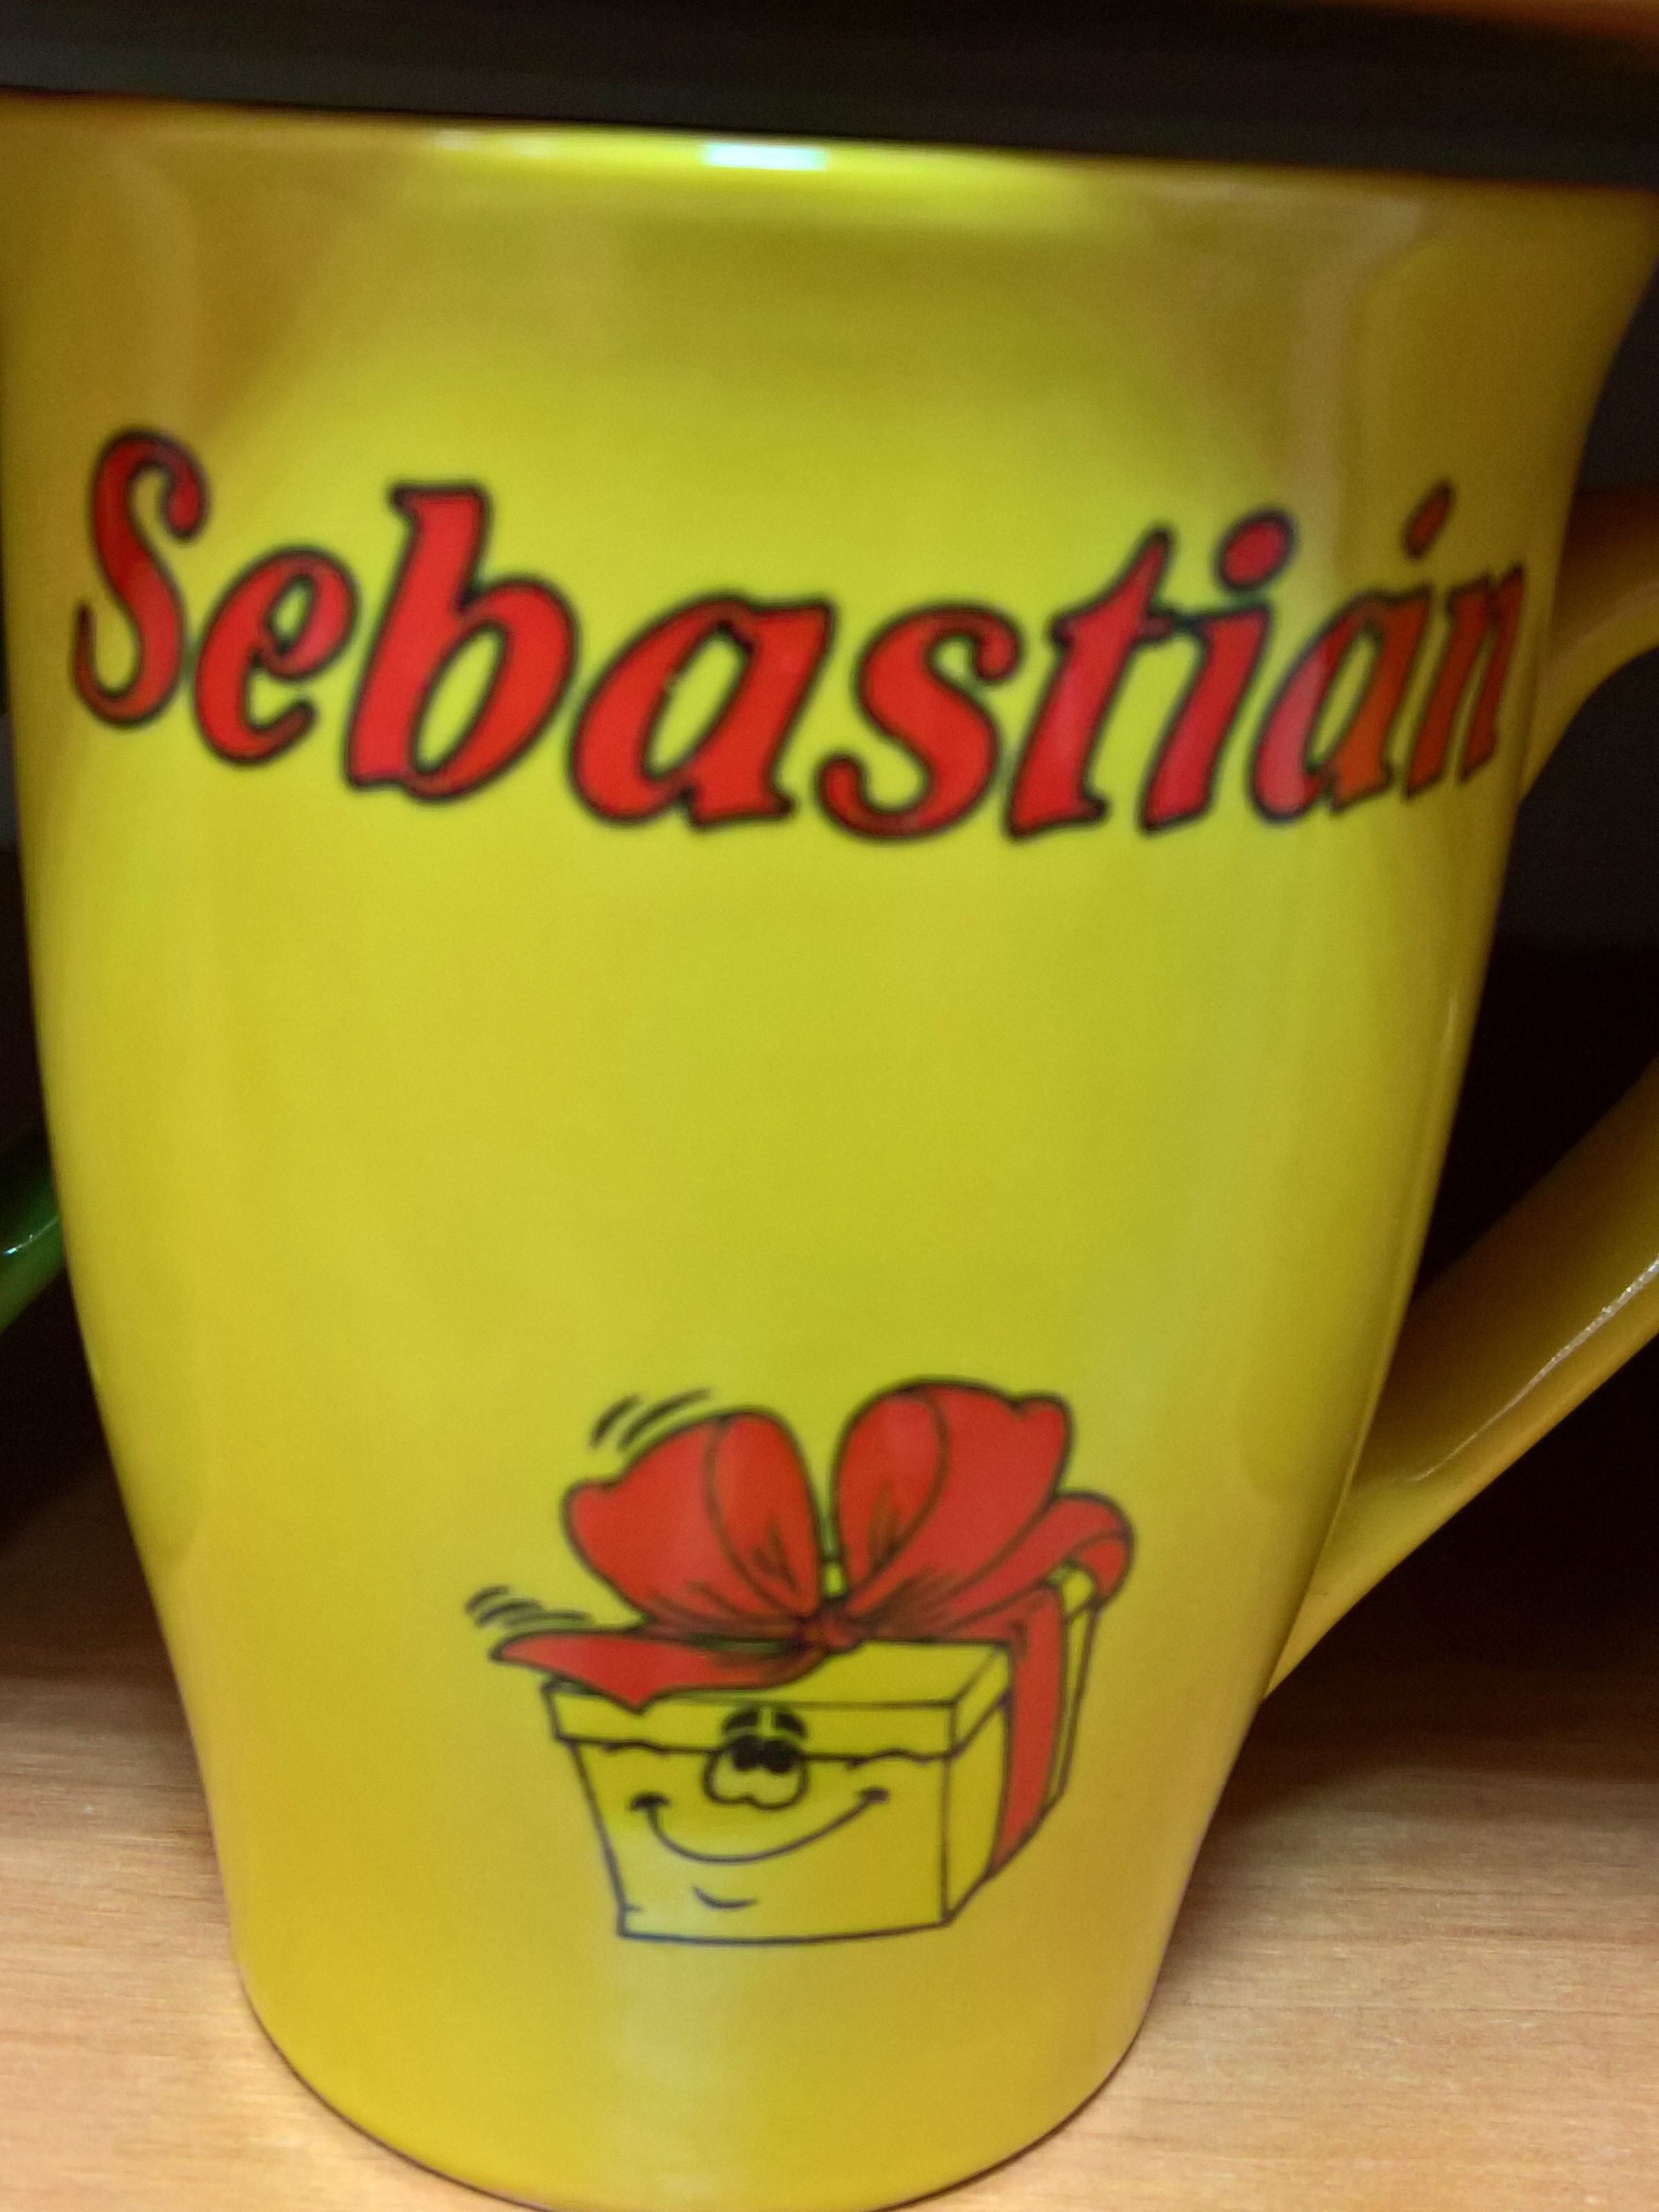 Hrnček "Sebastián"